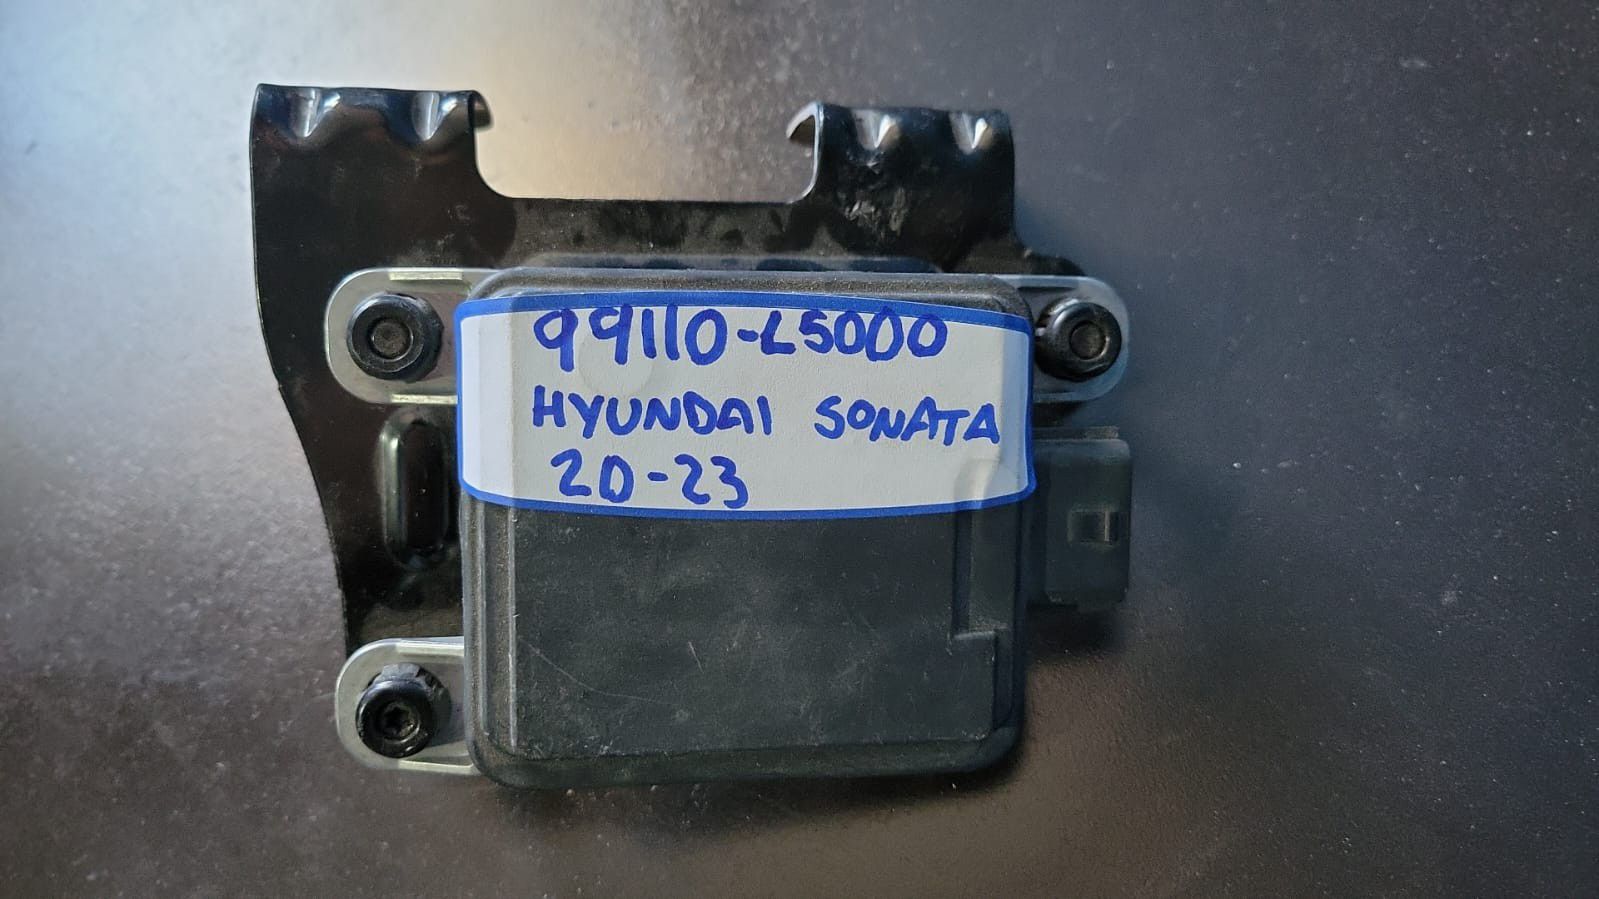 2020 - 2023 Hyundai Sonata Front Cruise Control Distance Radar Sensor Module Oem 